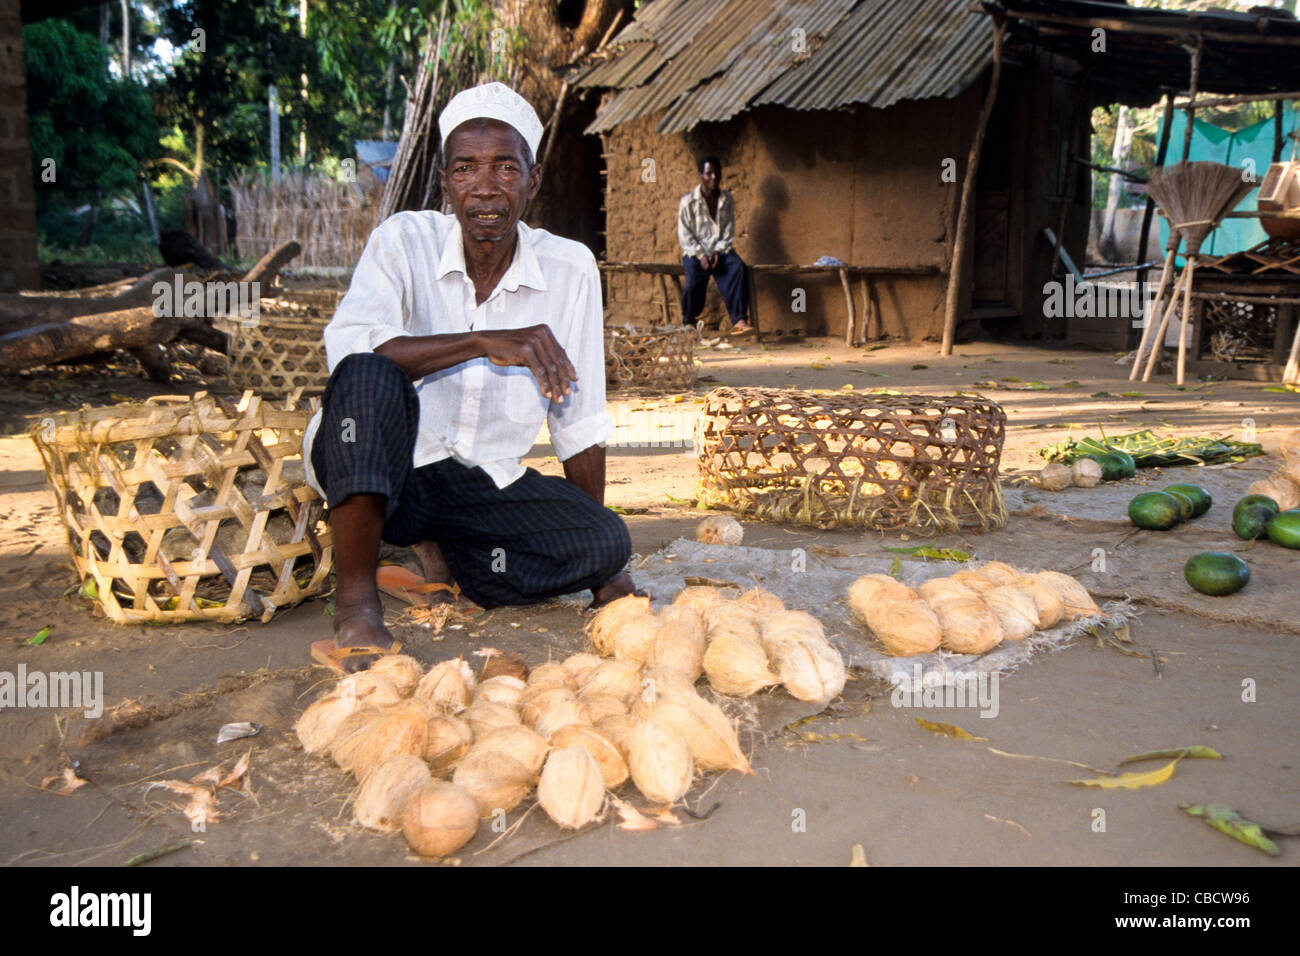 Man sells coconuts along a street in Dar es Salaam Tanzania Stock Photo